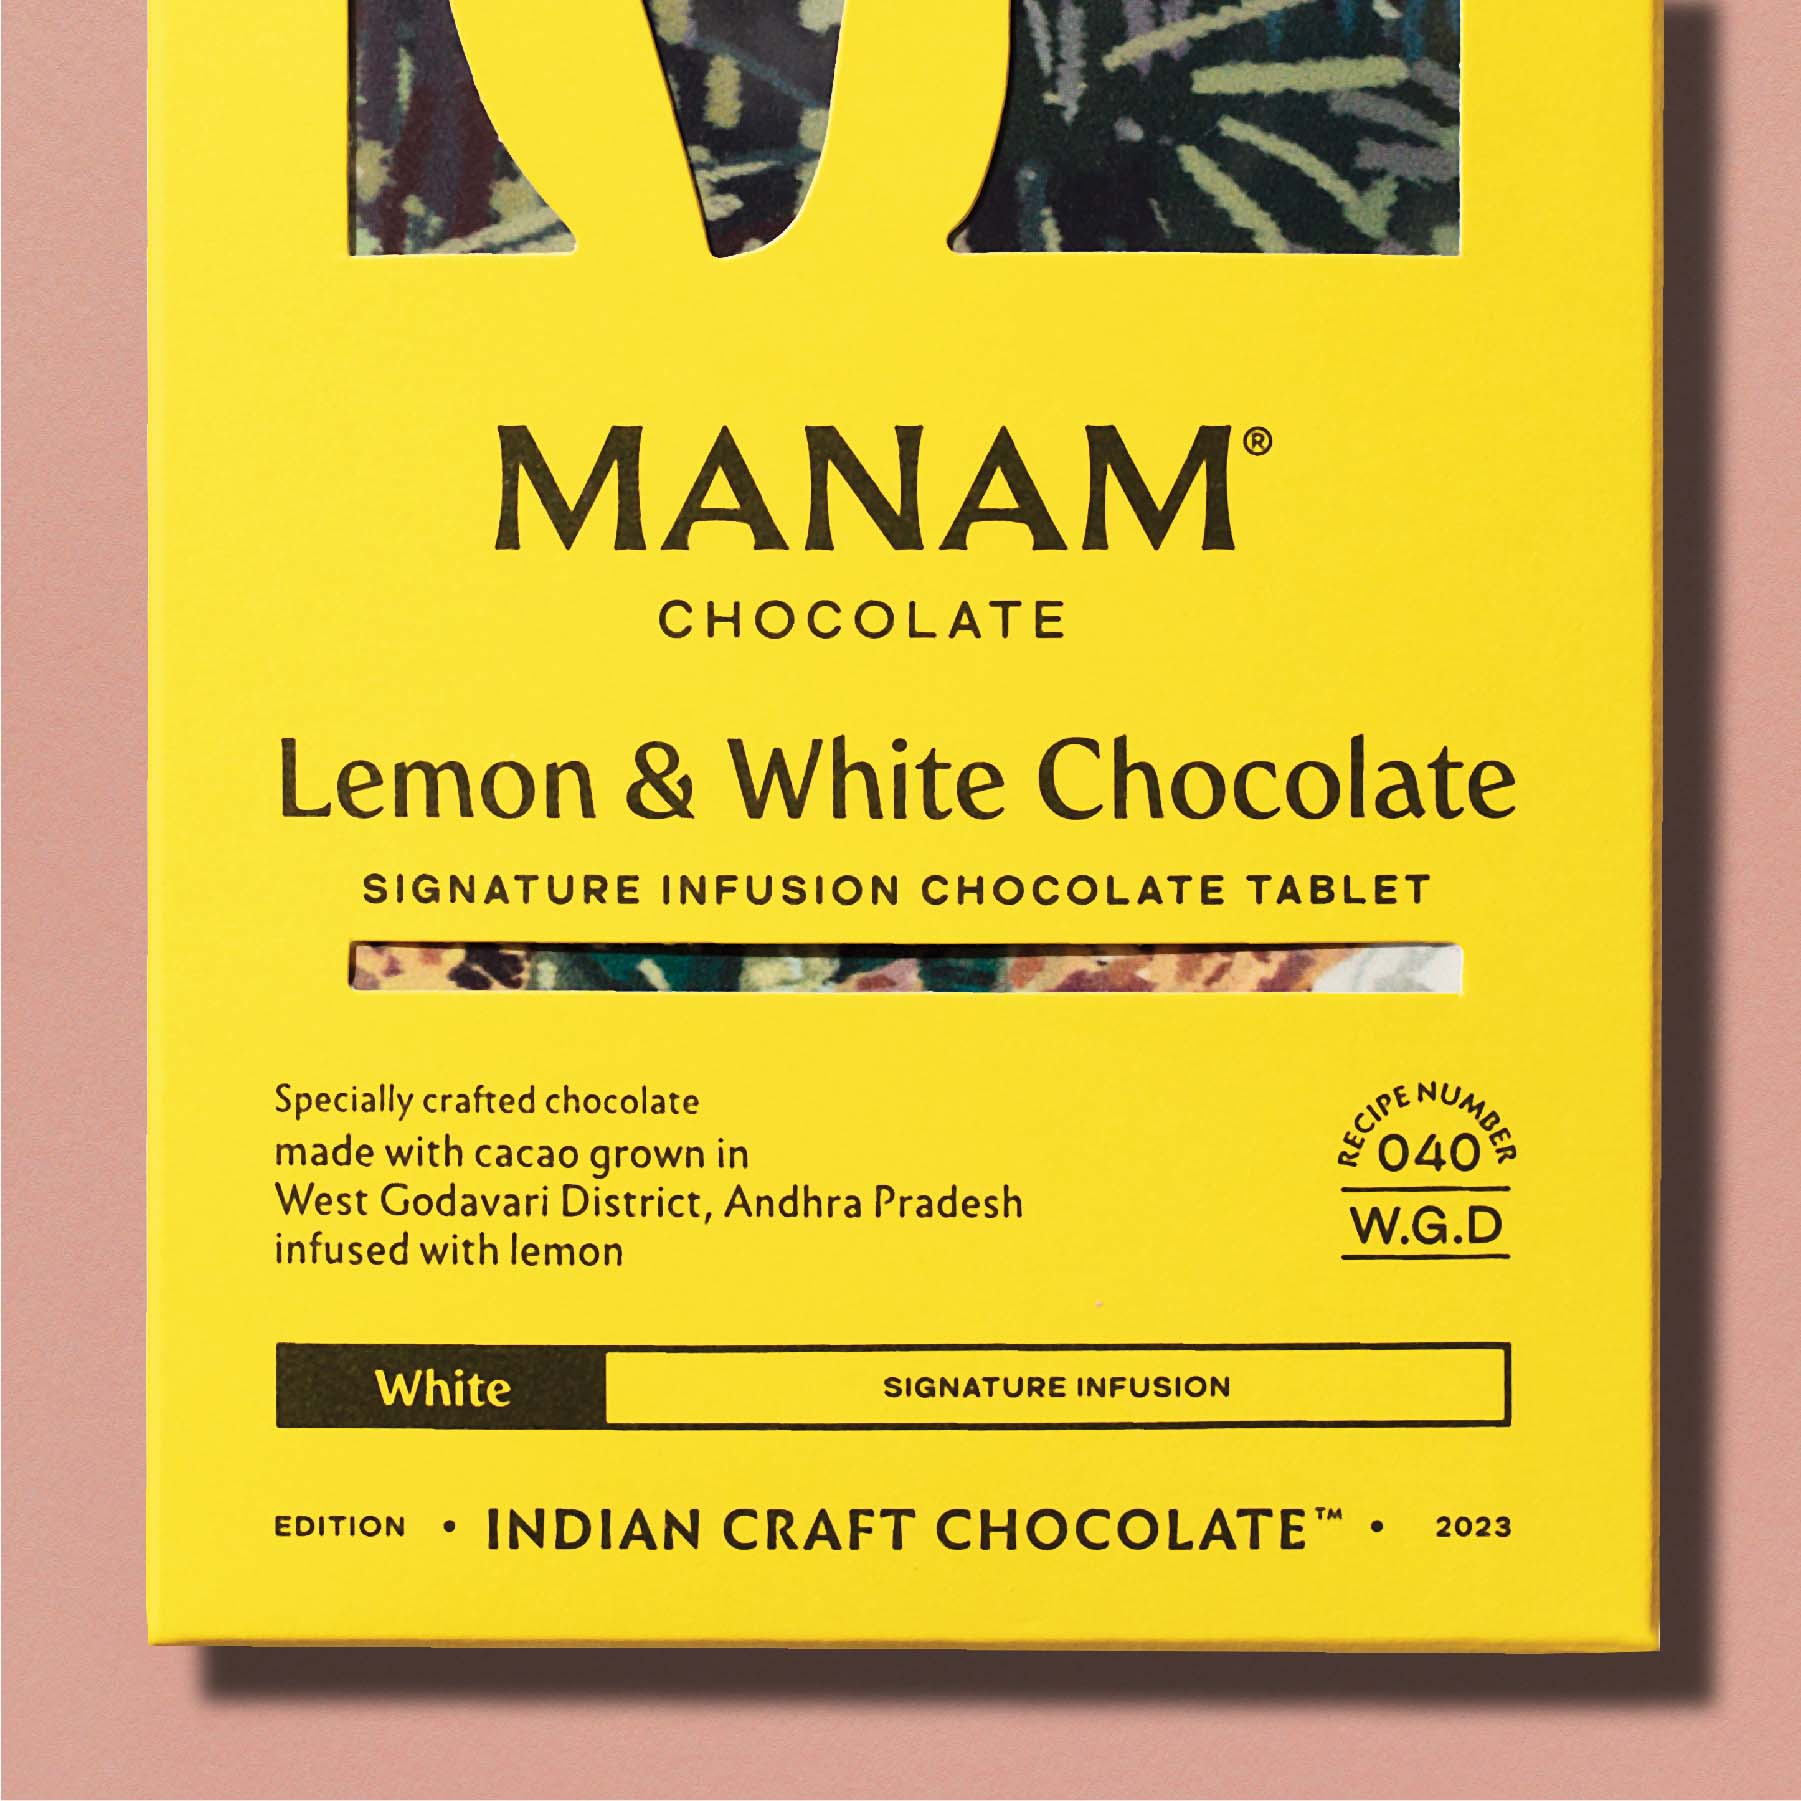 Lemon & White Chocolate Infusion Tablet - White